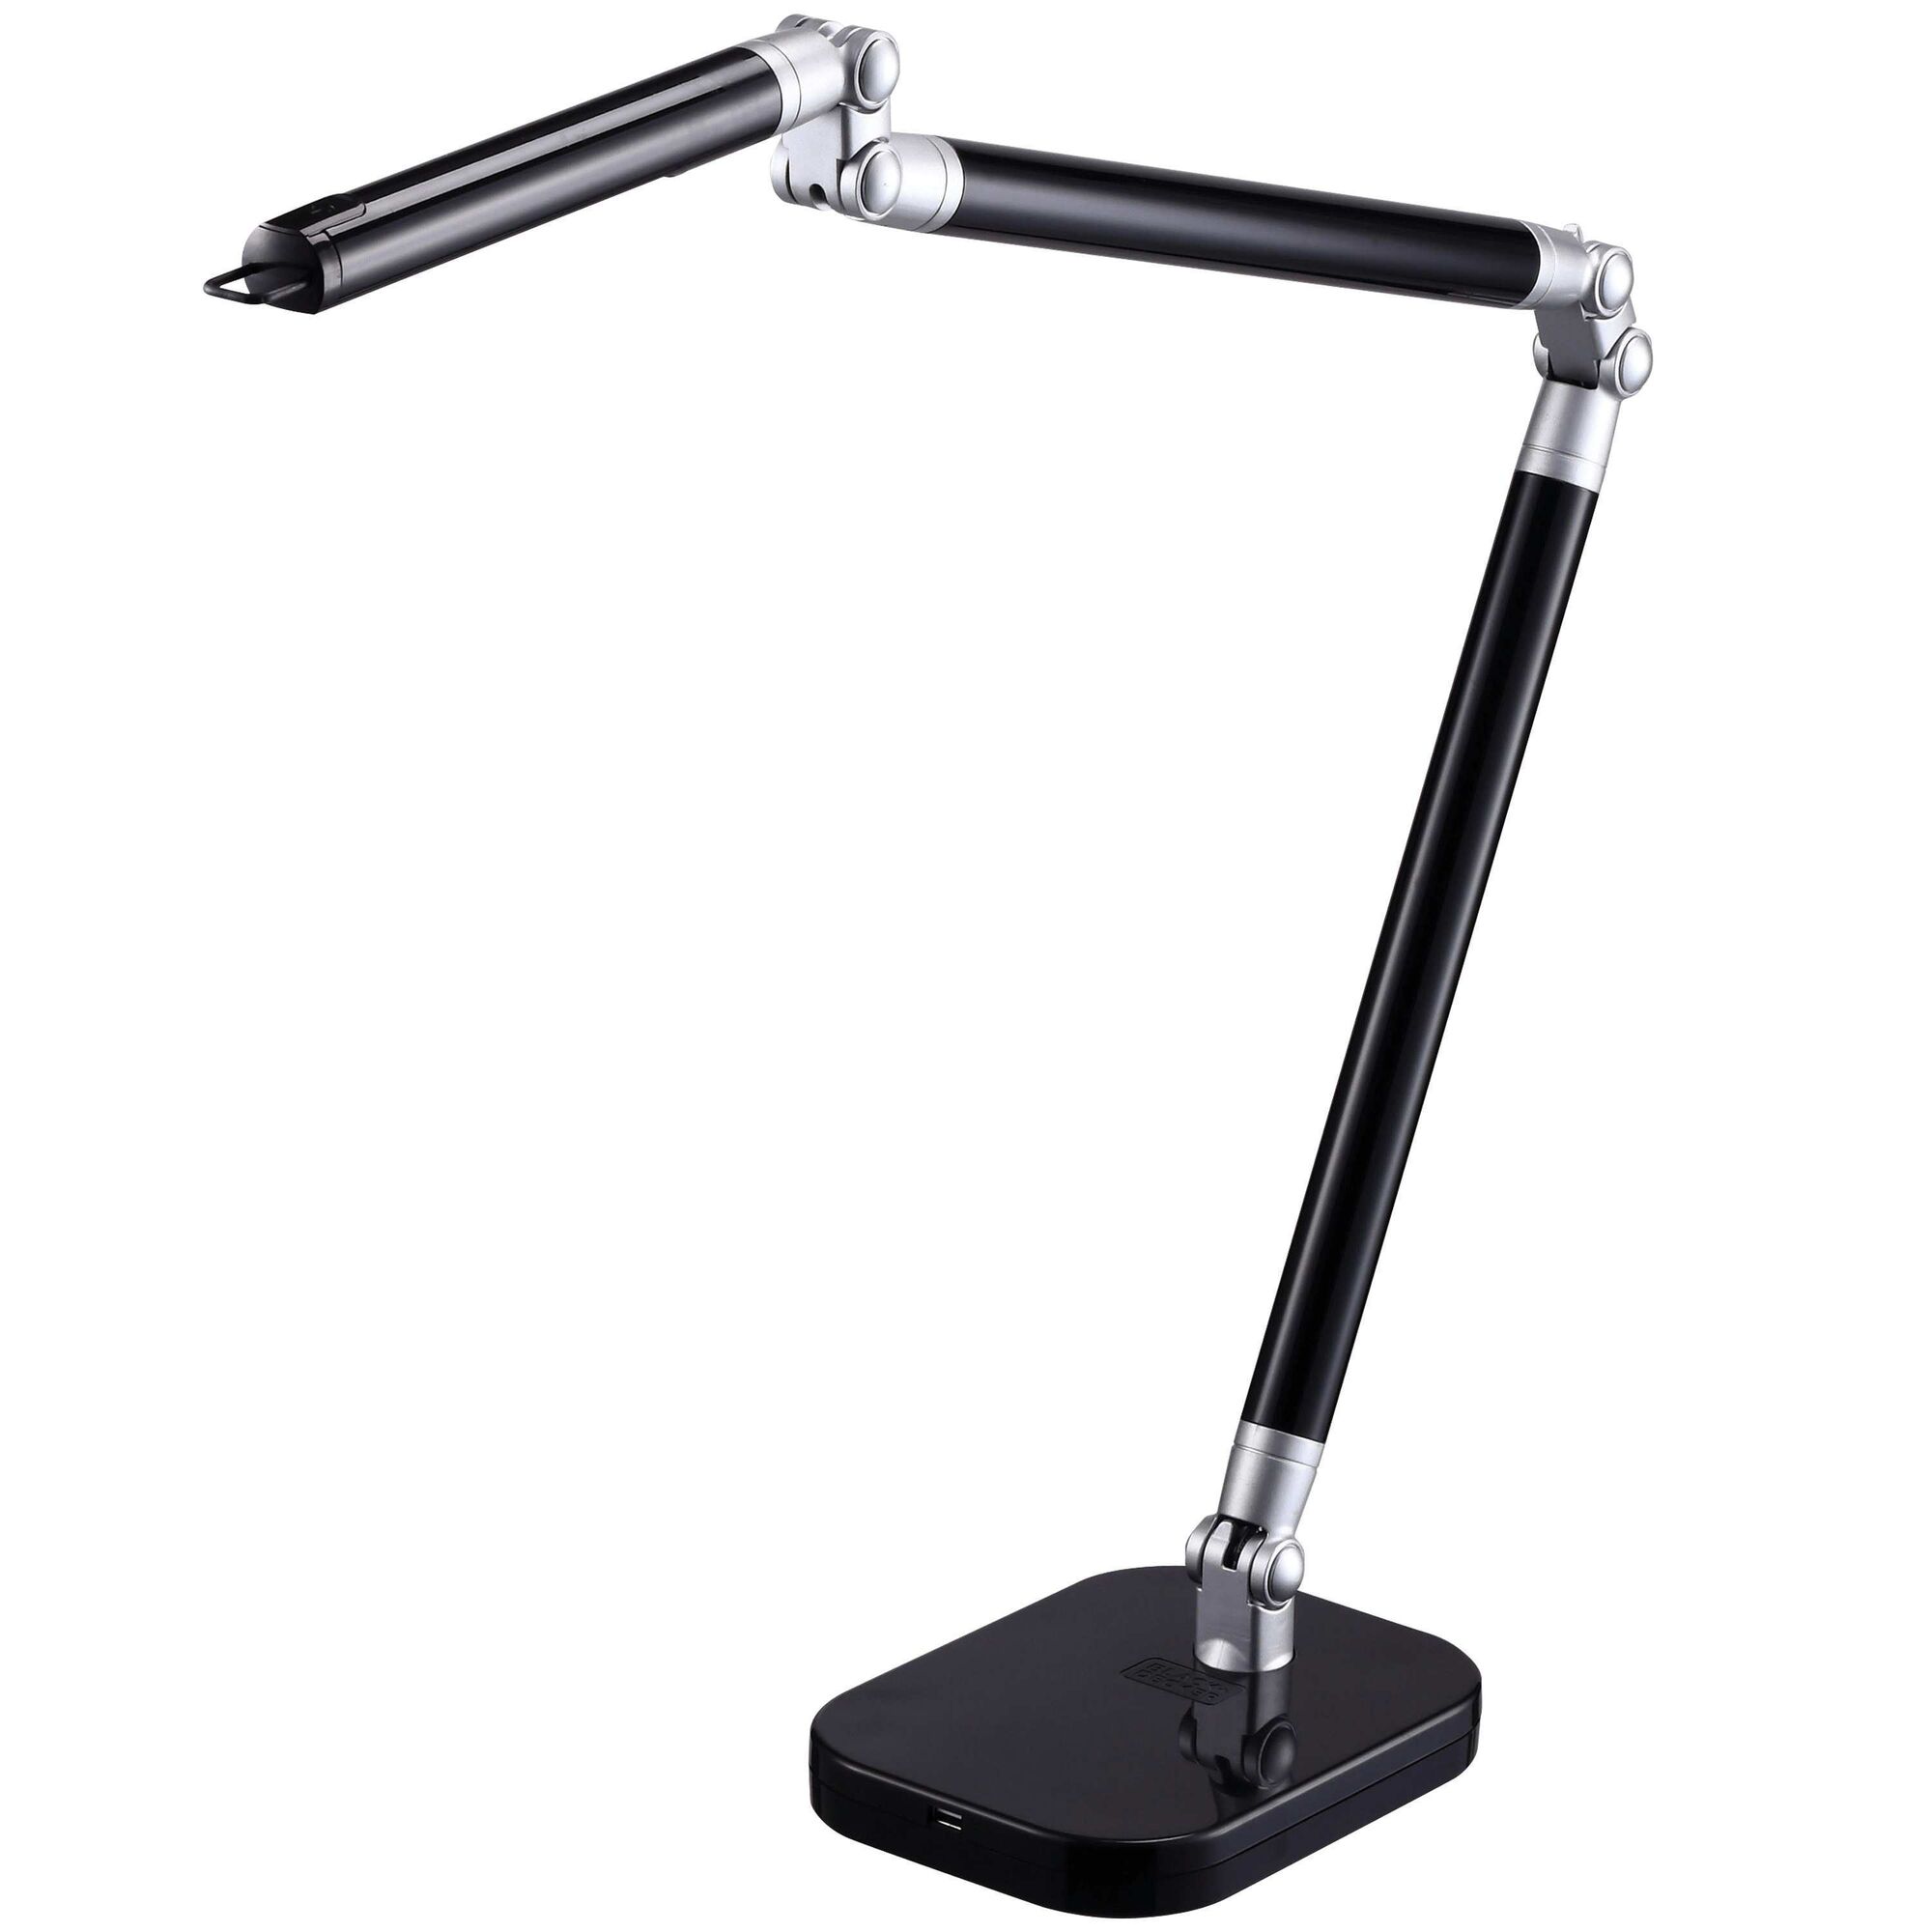 Ultra reach led desk lamp in black.